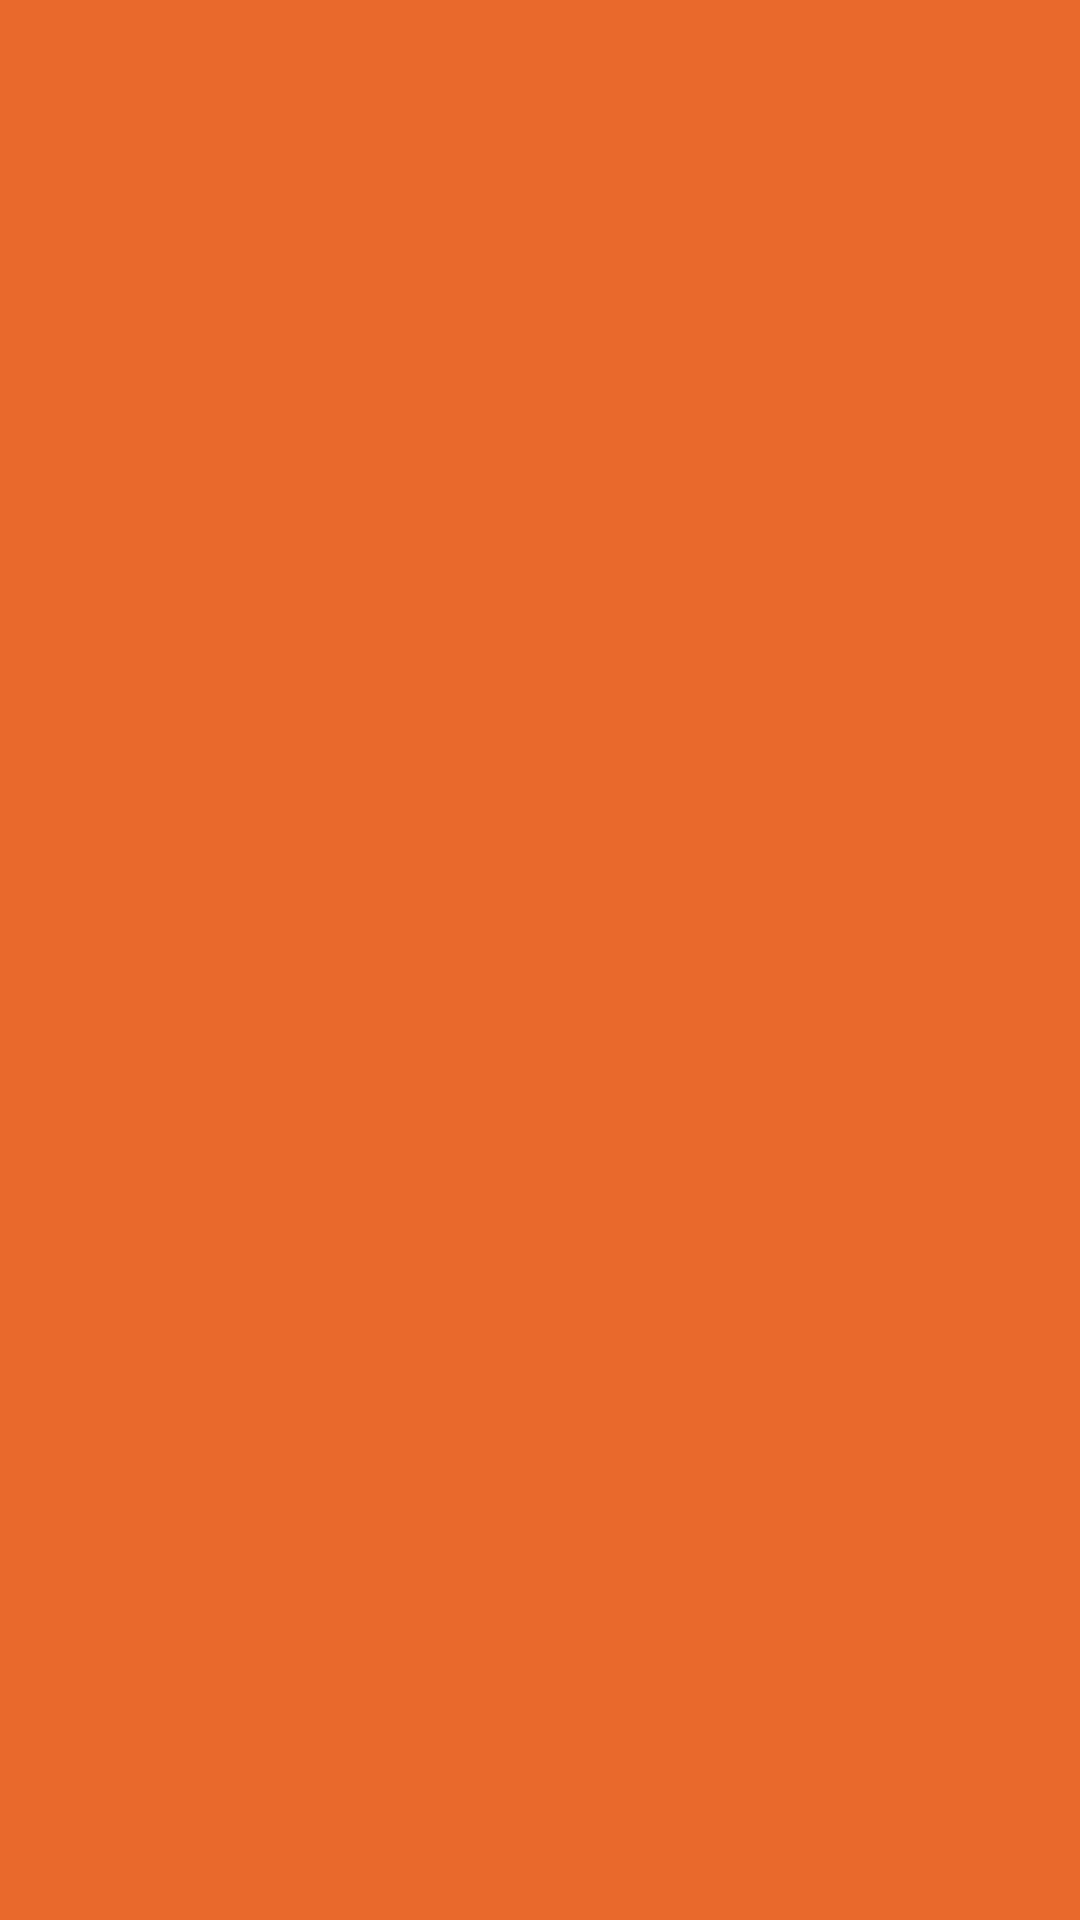 Solid Orange 2160 X 3840 Wallpaper